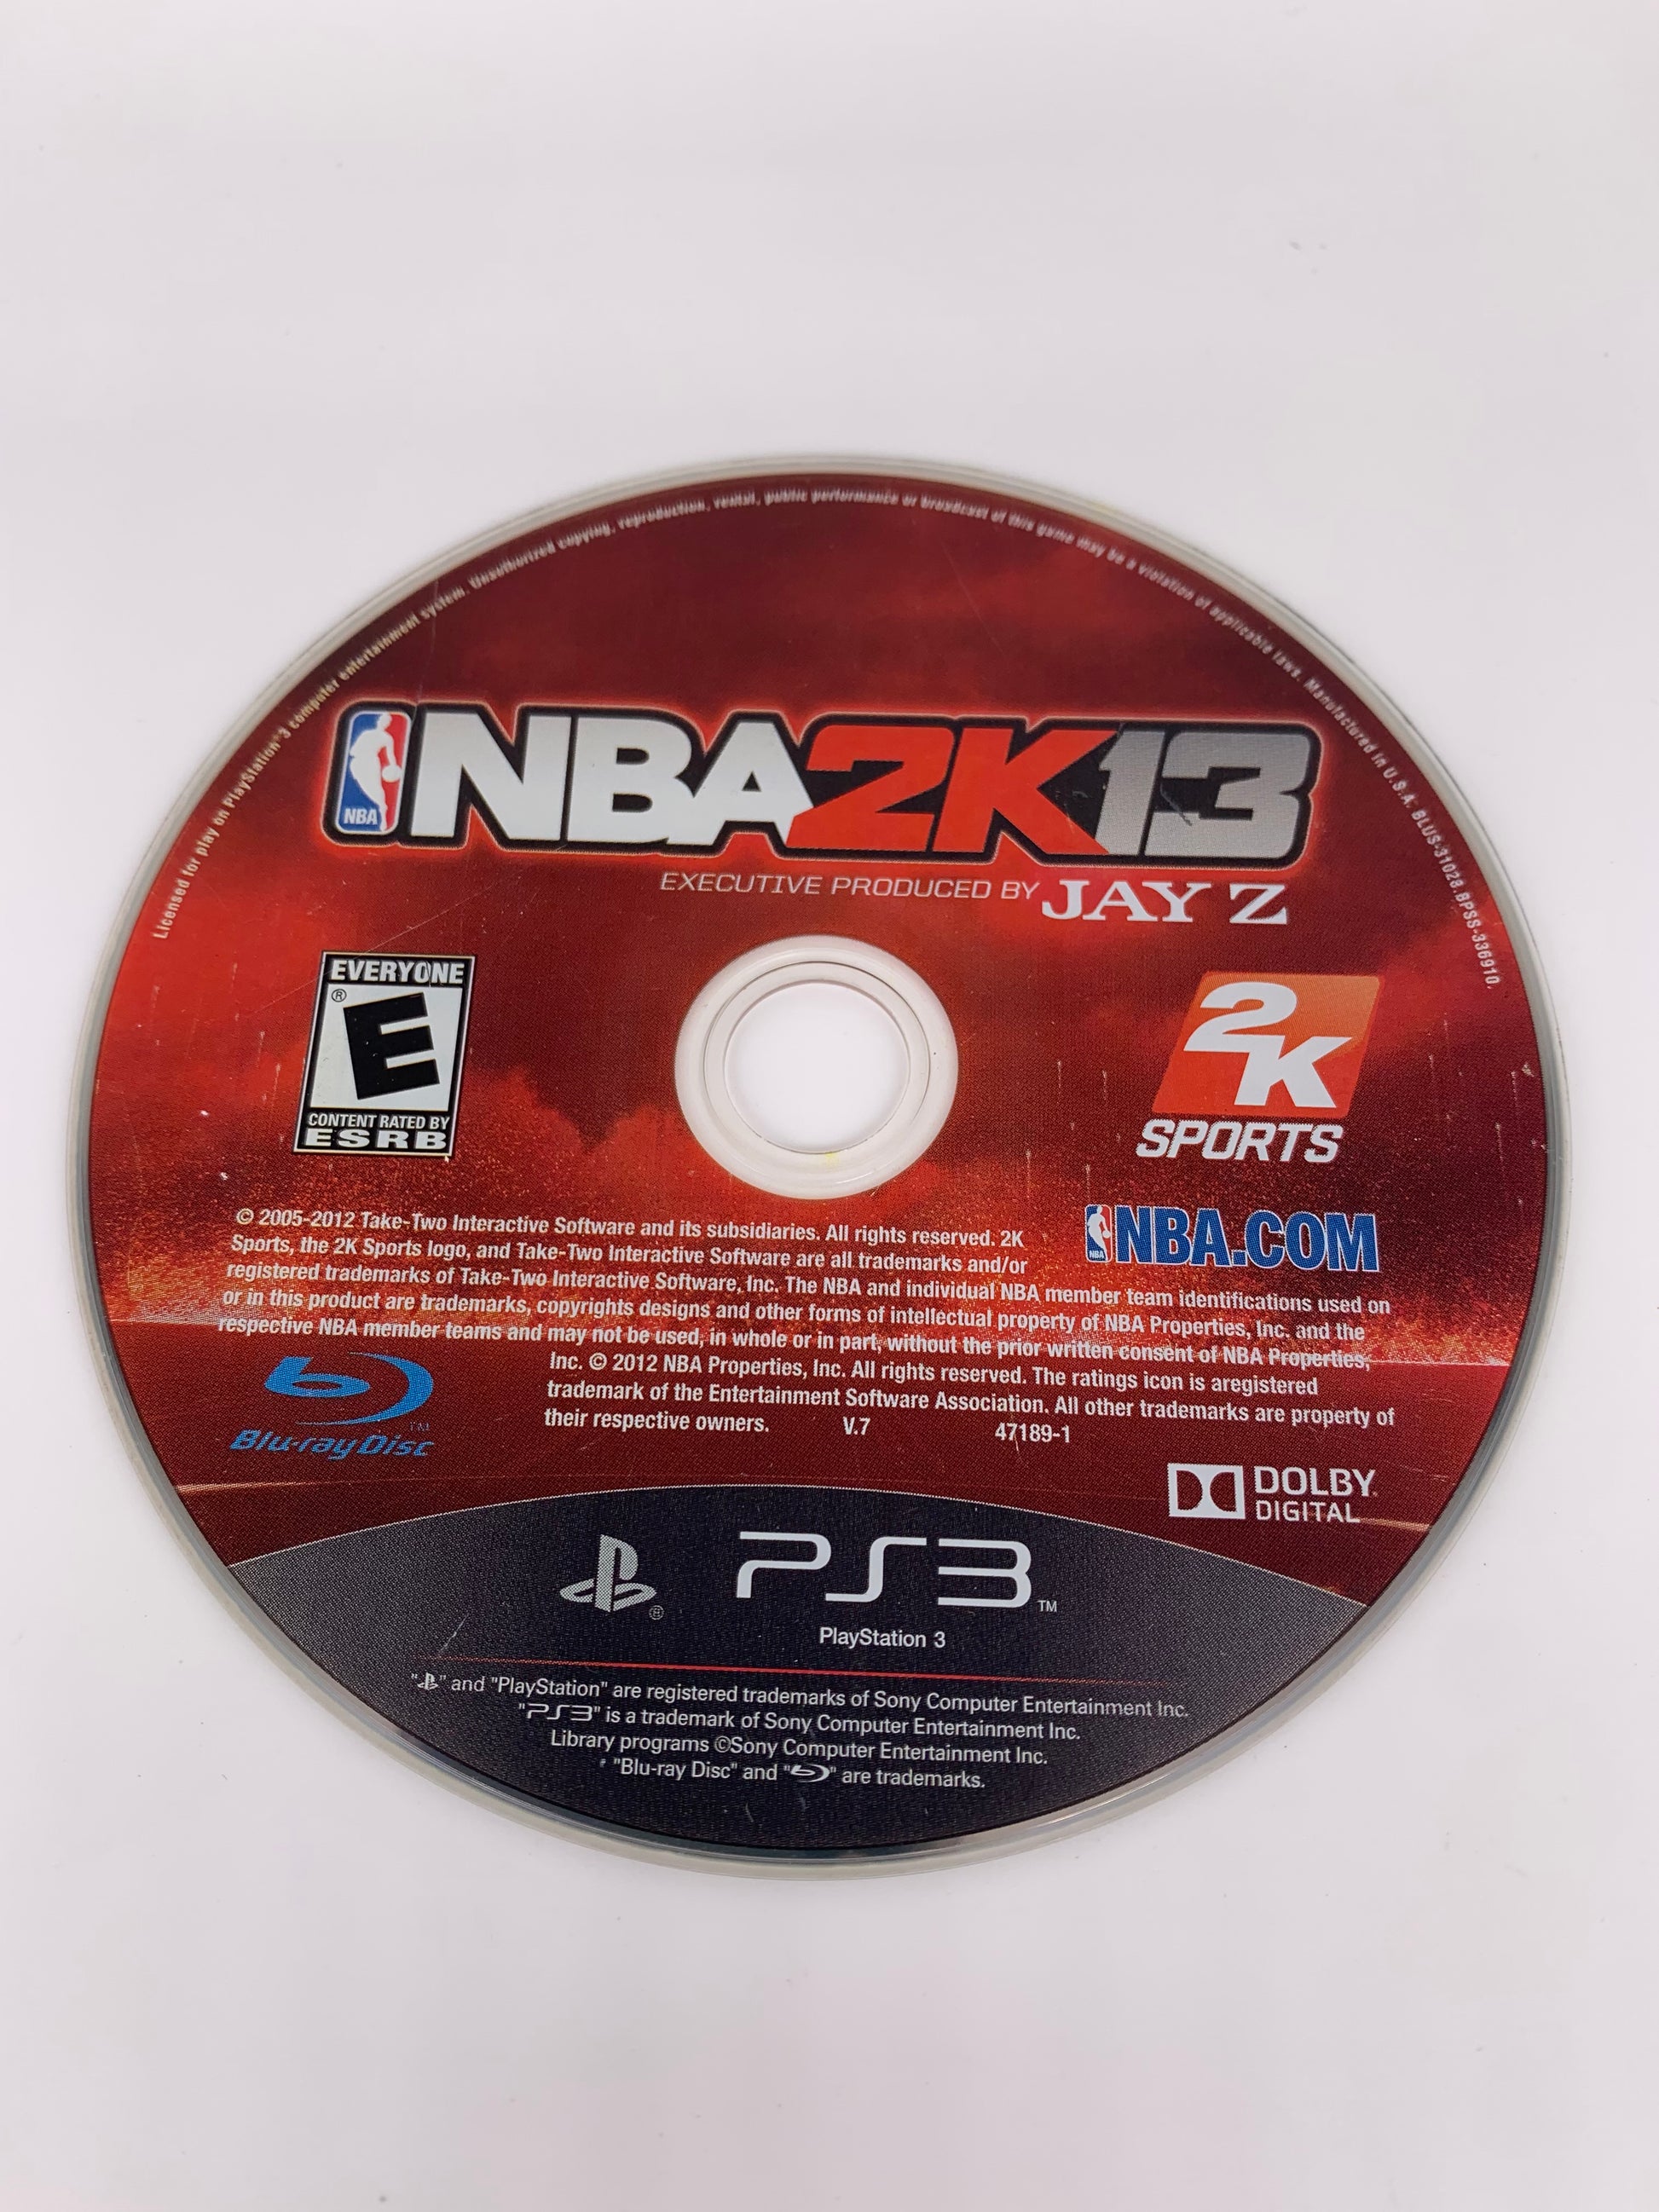 PiXEL-RETRO.COM : SONY PLAYSTATION 3 PS3 GAME BOX MANUAL NTSC NBA 2K13